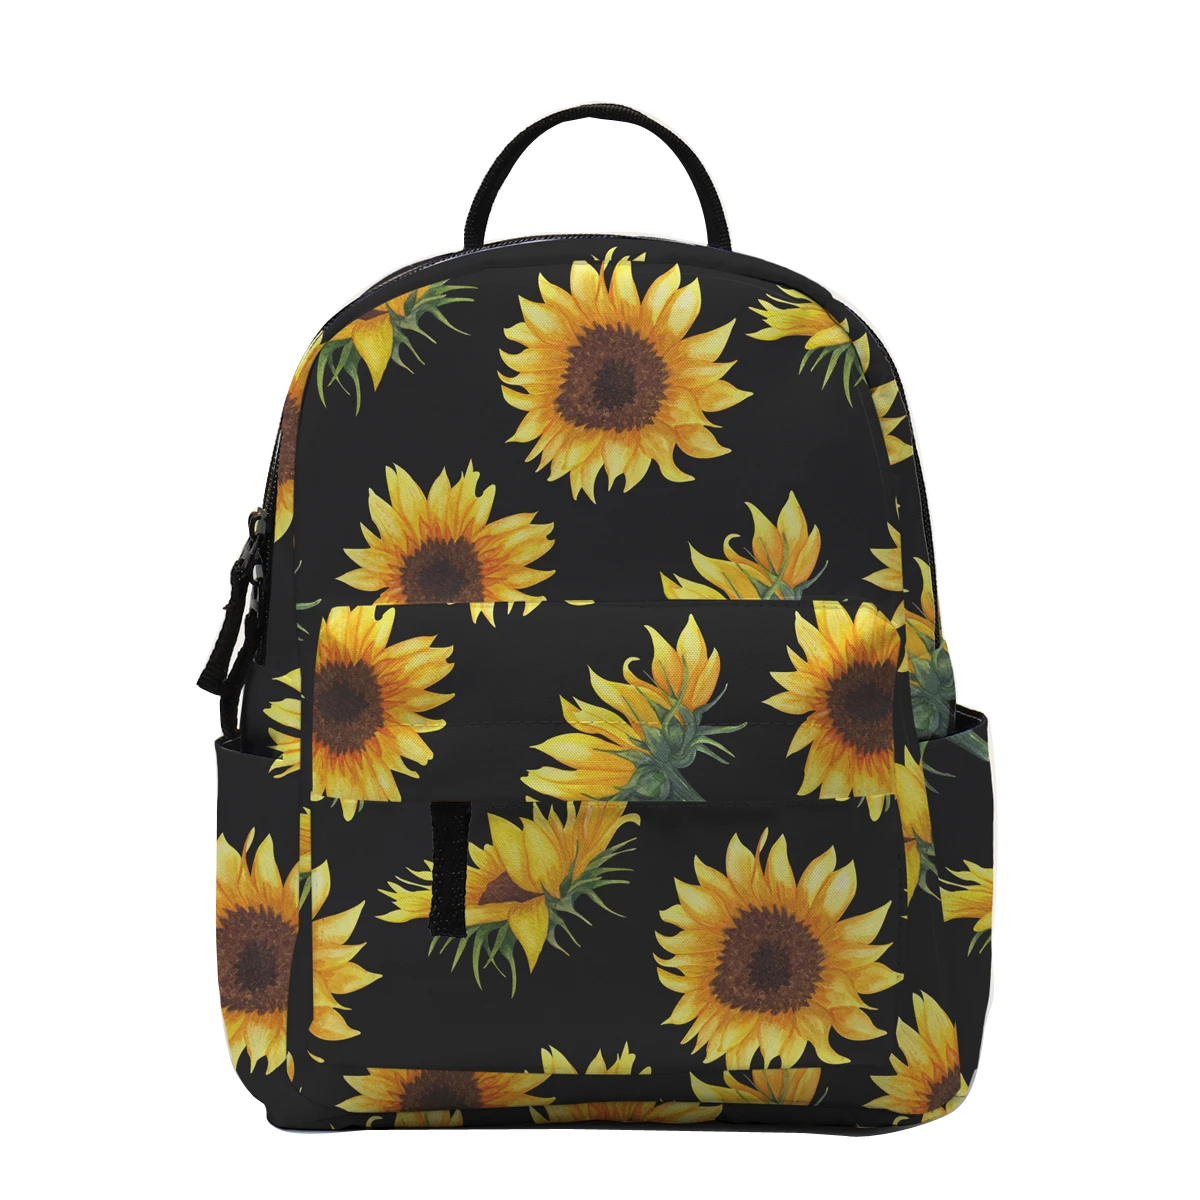 Deanfun Mini Backpacks for Girls Printing Yellow Sunflower Small Backpack Women Cute Kids Backpack School Bags Gift DMNSB-29